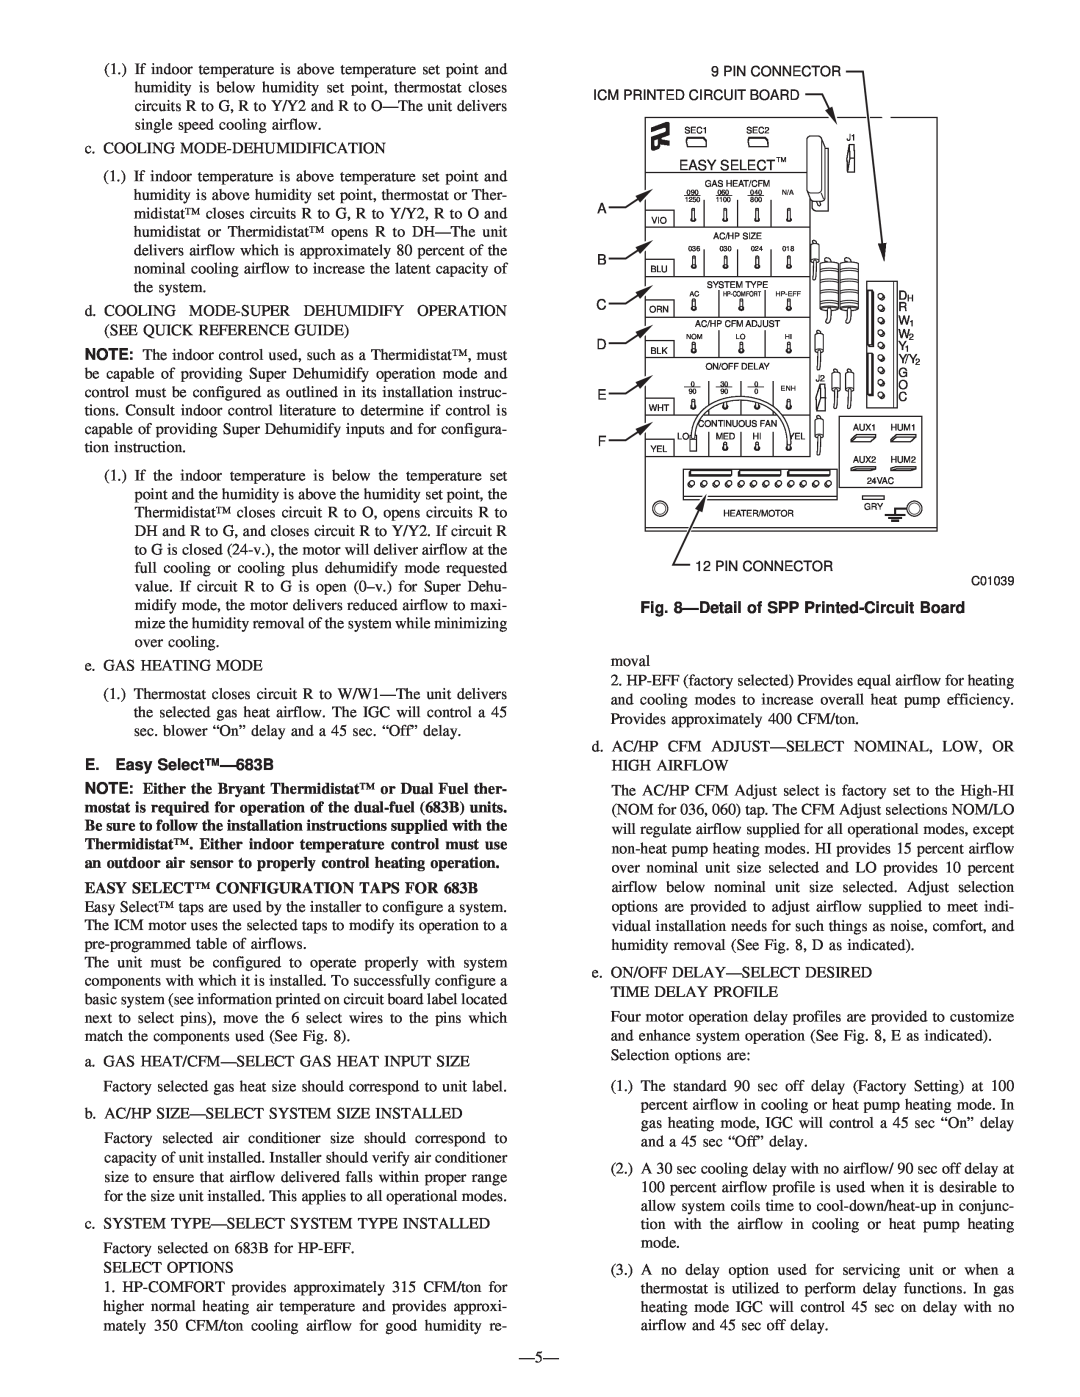 Bryant 702B, 583B, 602B installation instructions E. Easy SelectÐ683B, ÐDetail of SPP Printed-Circuit Board 